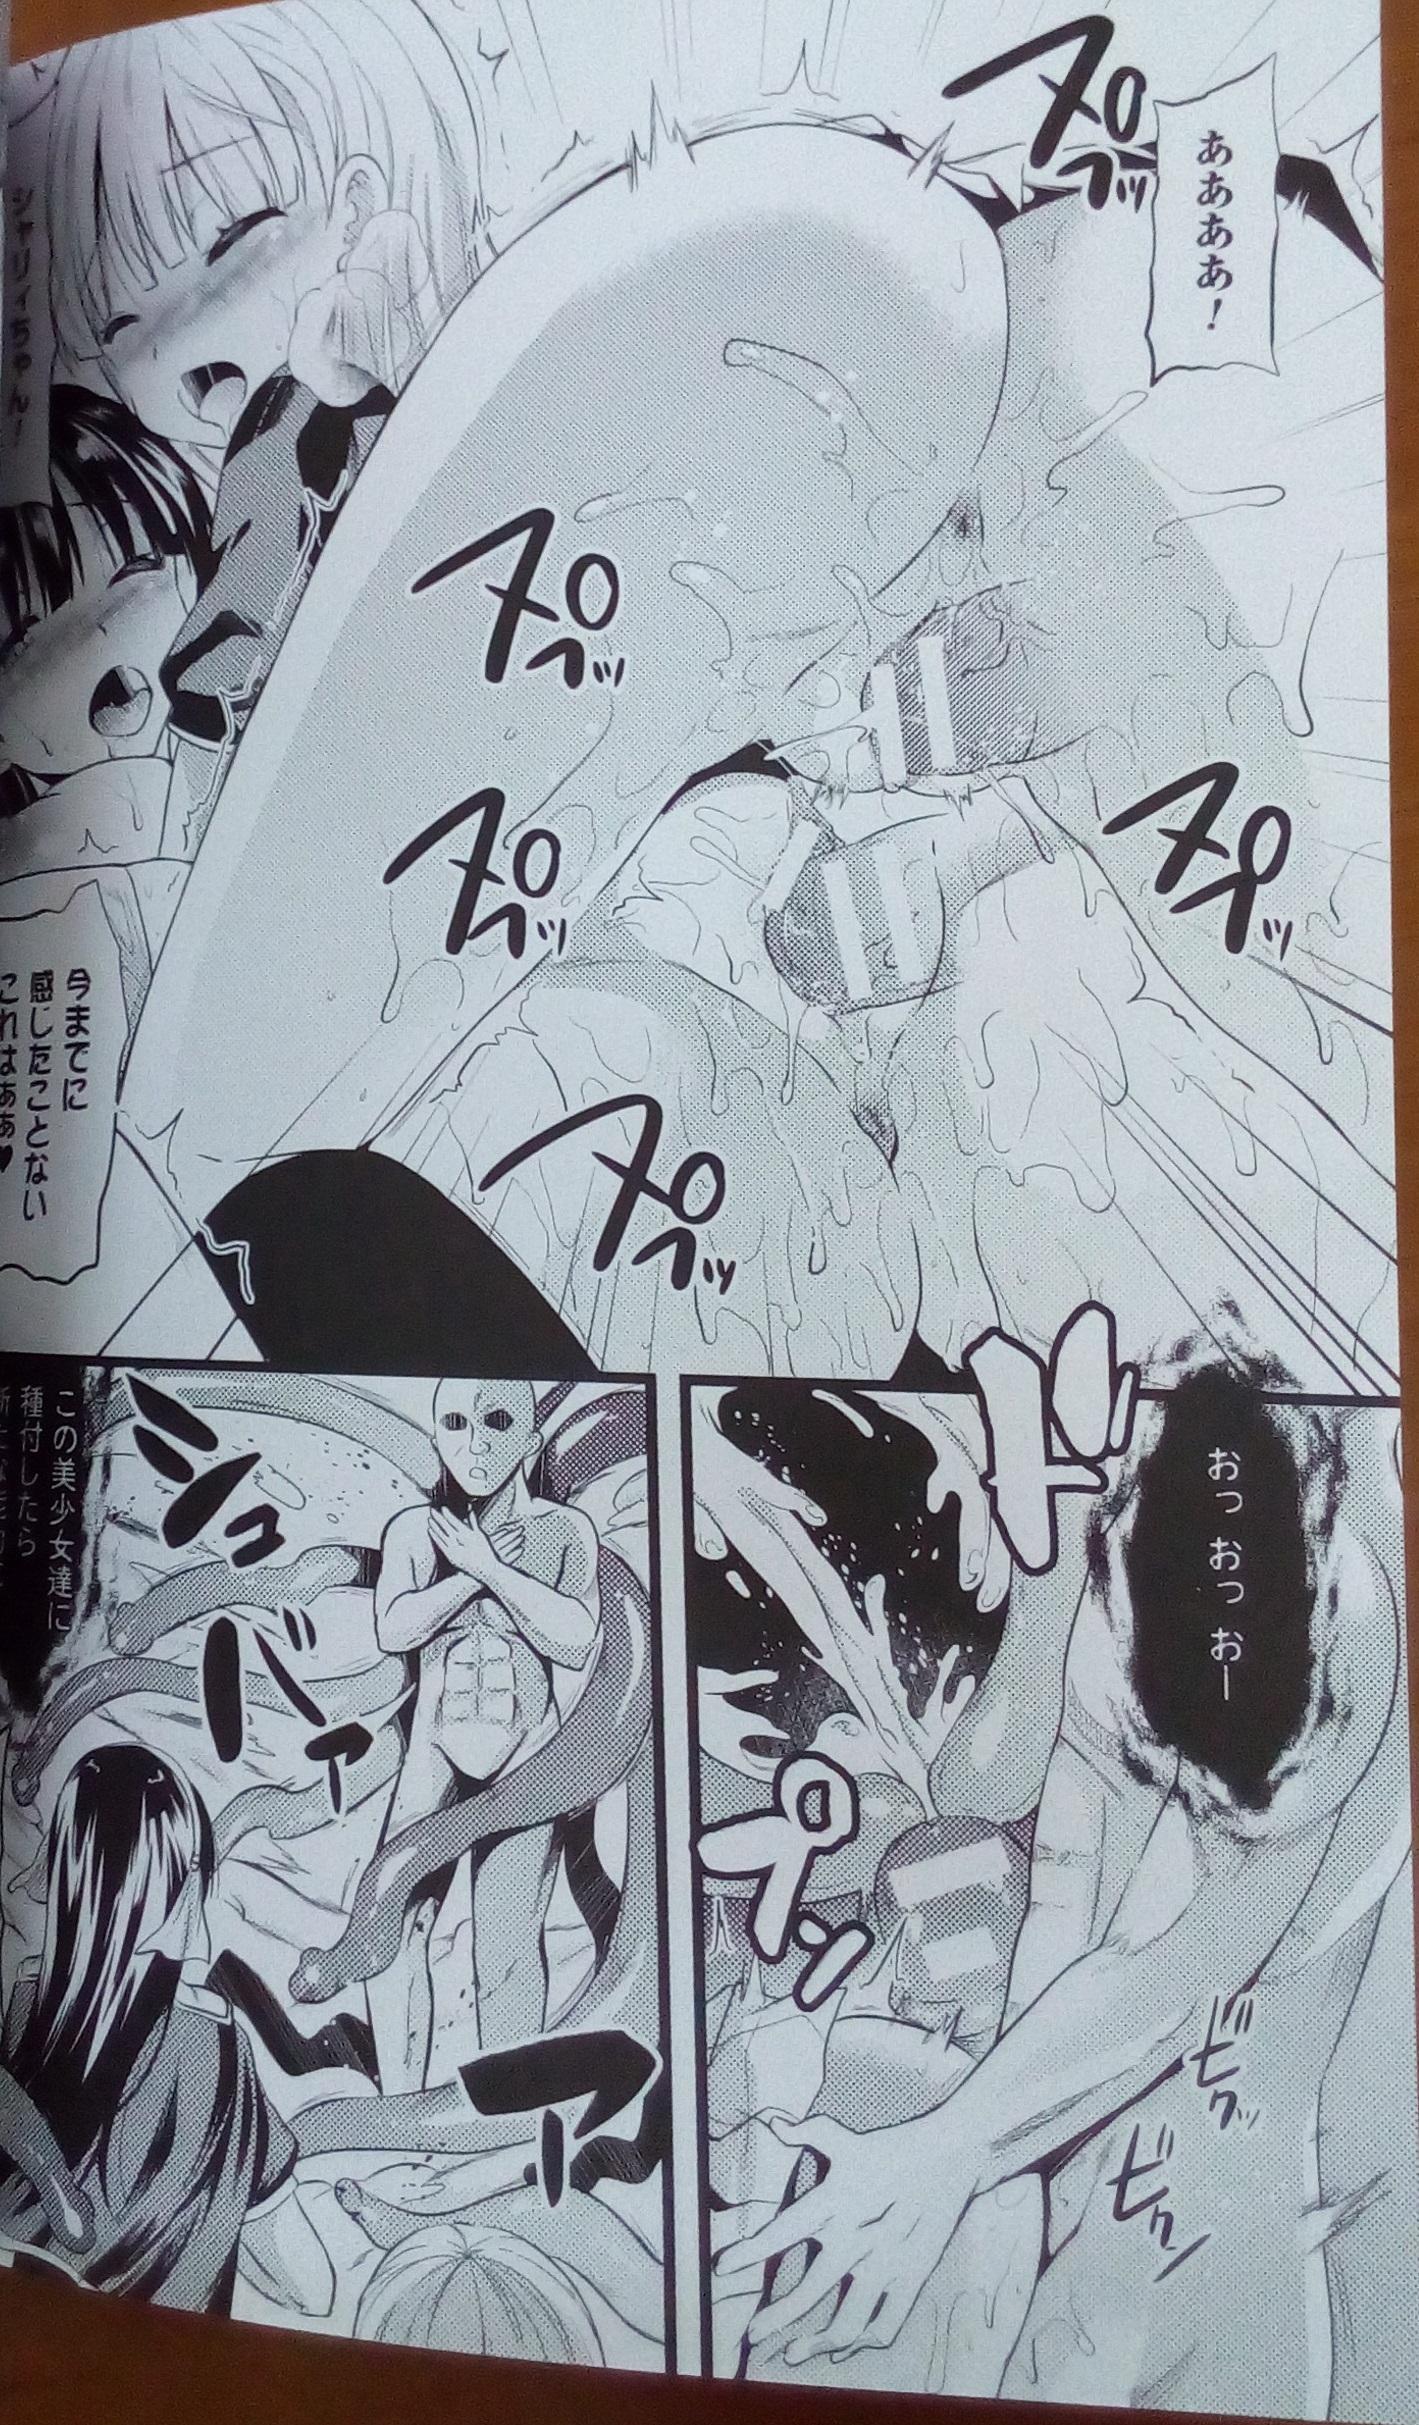 [Erect Sawaru] Shinkyoku no Grimoire III -PANDRA saga 2nd story-  Append book [Photoed] 28